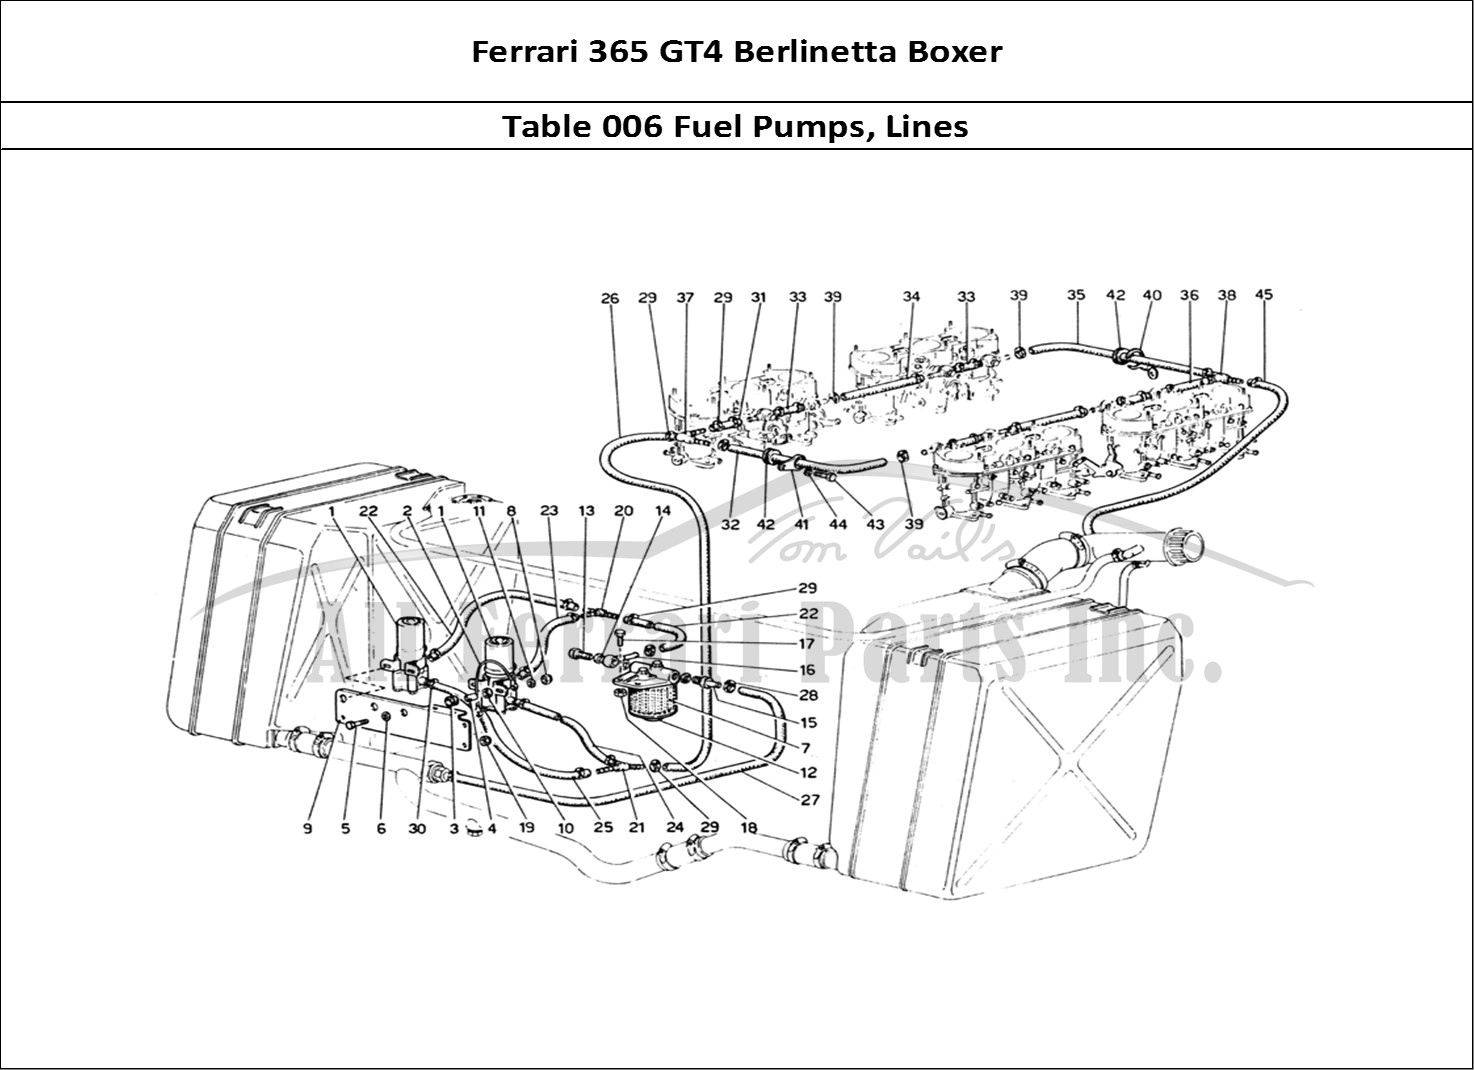 Ferrari Parts Ferrari 365 GT4 Berlinetta Boxer Page 006 Fuel Pumps and Pipes